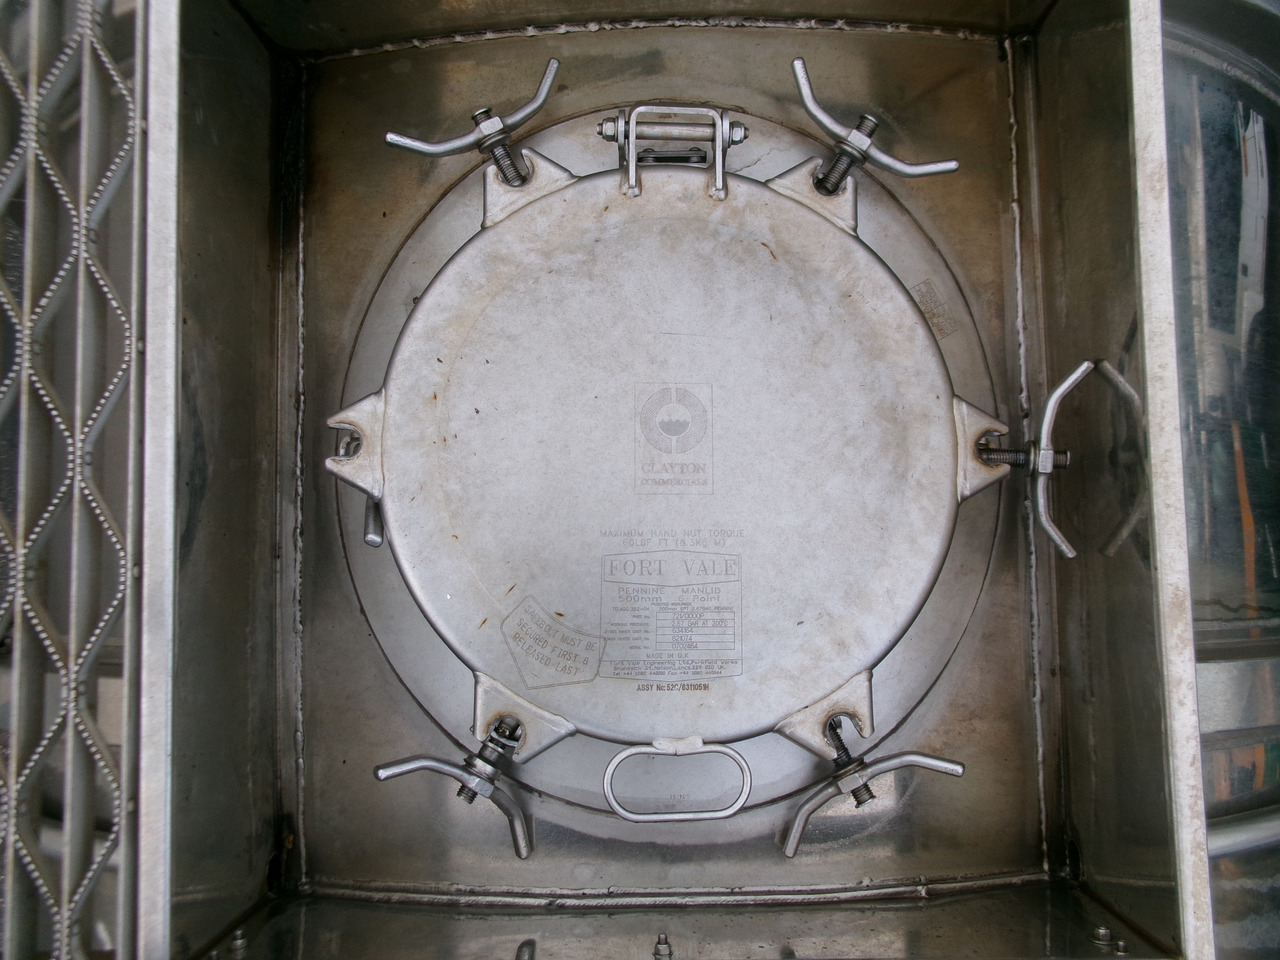 Cisterna semirremolque para transporte de substancias químicas Clayton Chemical tank inox 37.5 m3 / 1 comp: foto 23